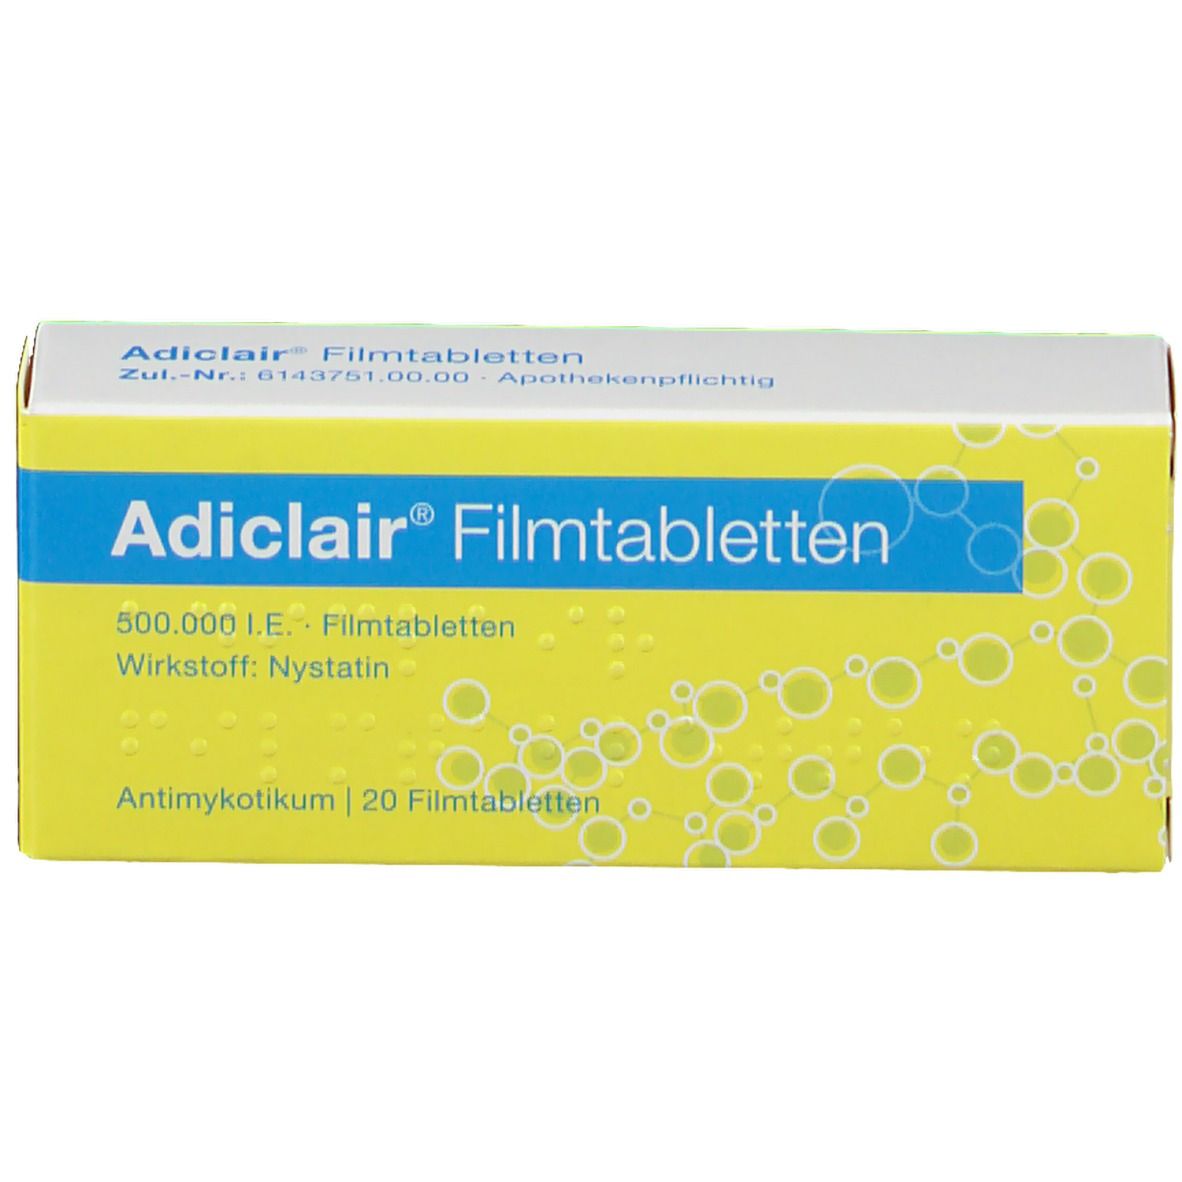 Adiclair® Filmtabletten